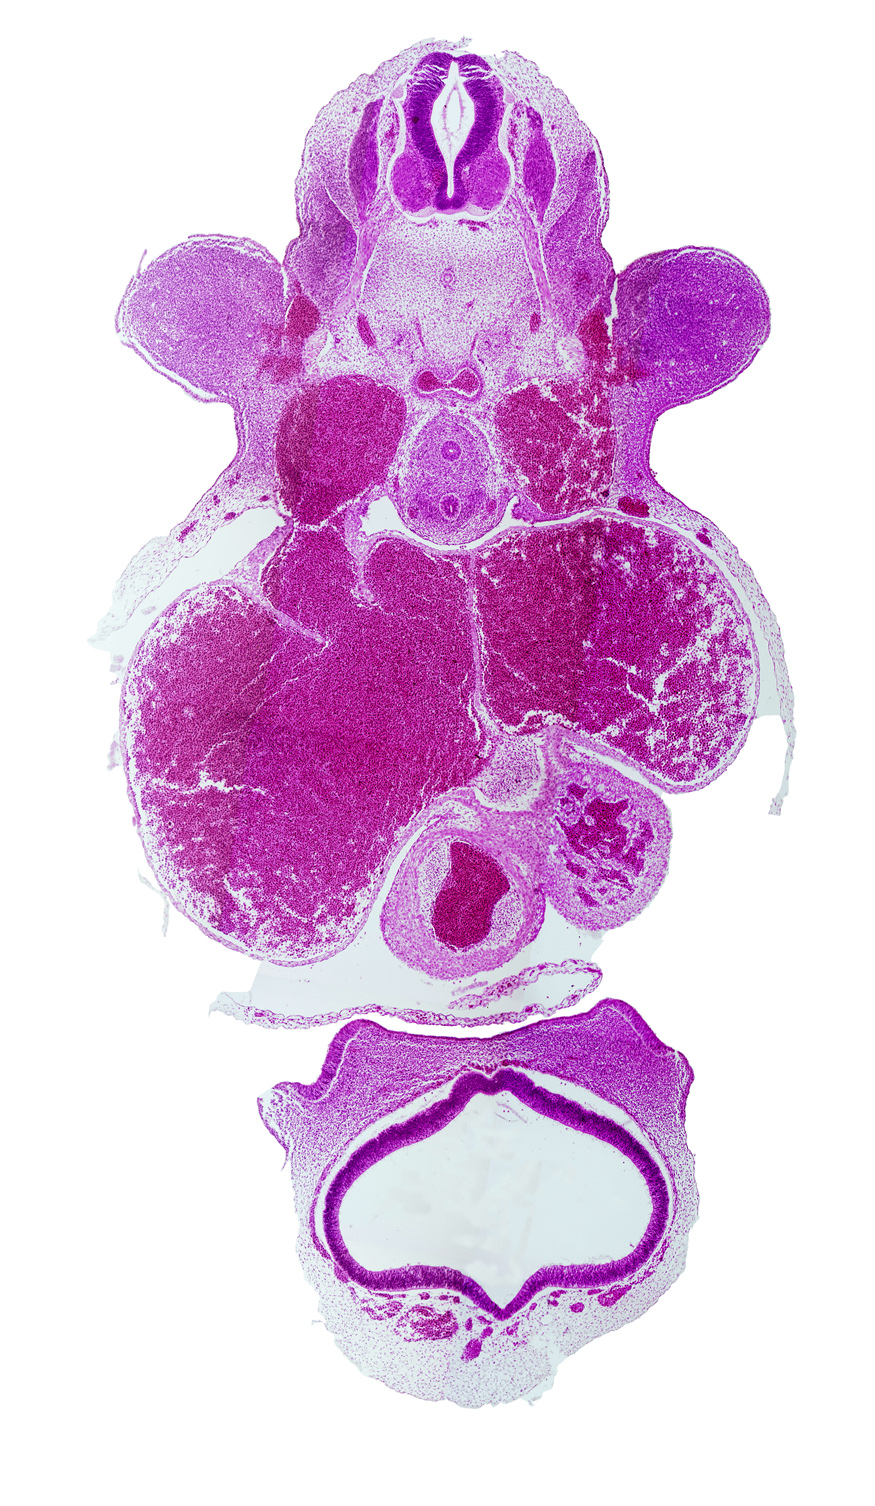 C-6 spinal ganglion, C-6 spinal nerve, central canal, cerebral vesicle (primordial cerebral hemisphere), dorsal aorta, esophagus, left atrium, left truncus ridge, left venous valve, left ventricle, marginal sinus, nasal disc (olfactory placode), neural arch blastema, notochord, pericardial cavity, primary interatrial septum (septum primum), right atrium, right common cardinal vein, right truncus ridge, right venous valve, sinus venosus, telencephalon medium, trachea, truncus arteriosus (outflow tract), upper limb